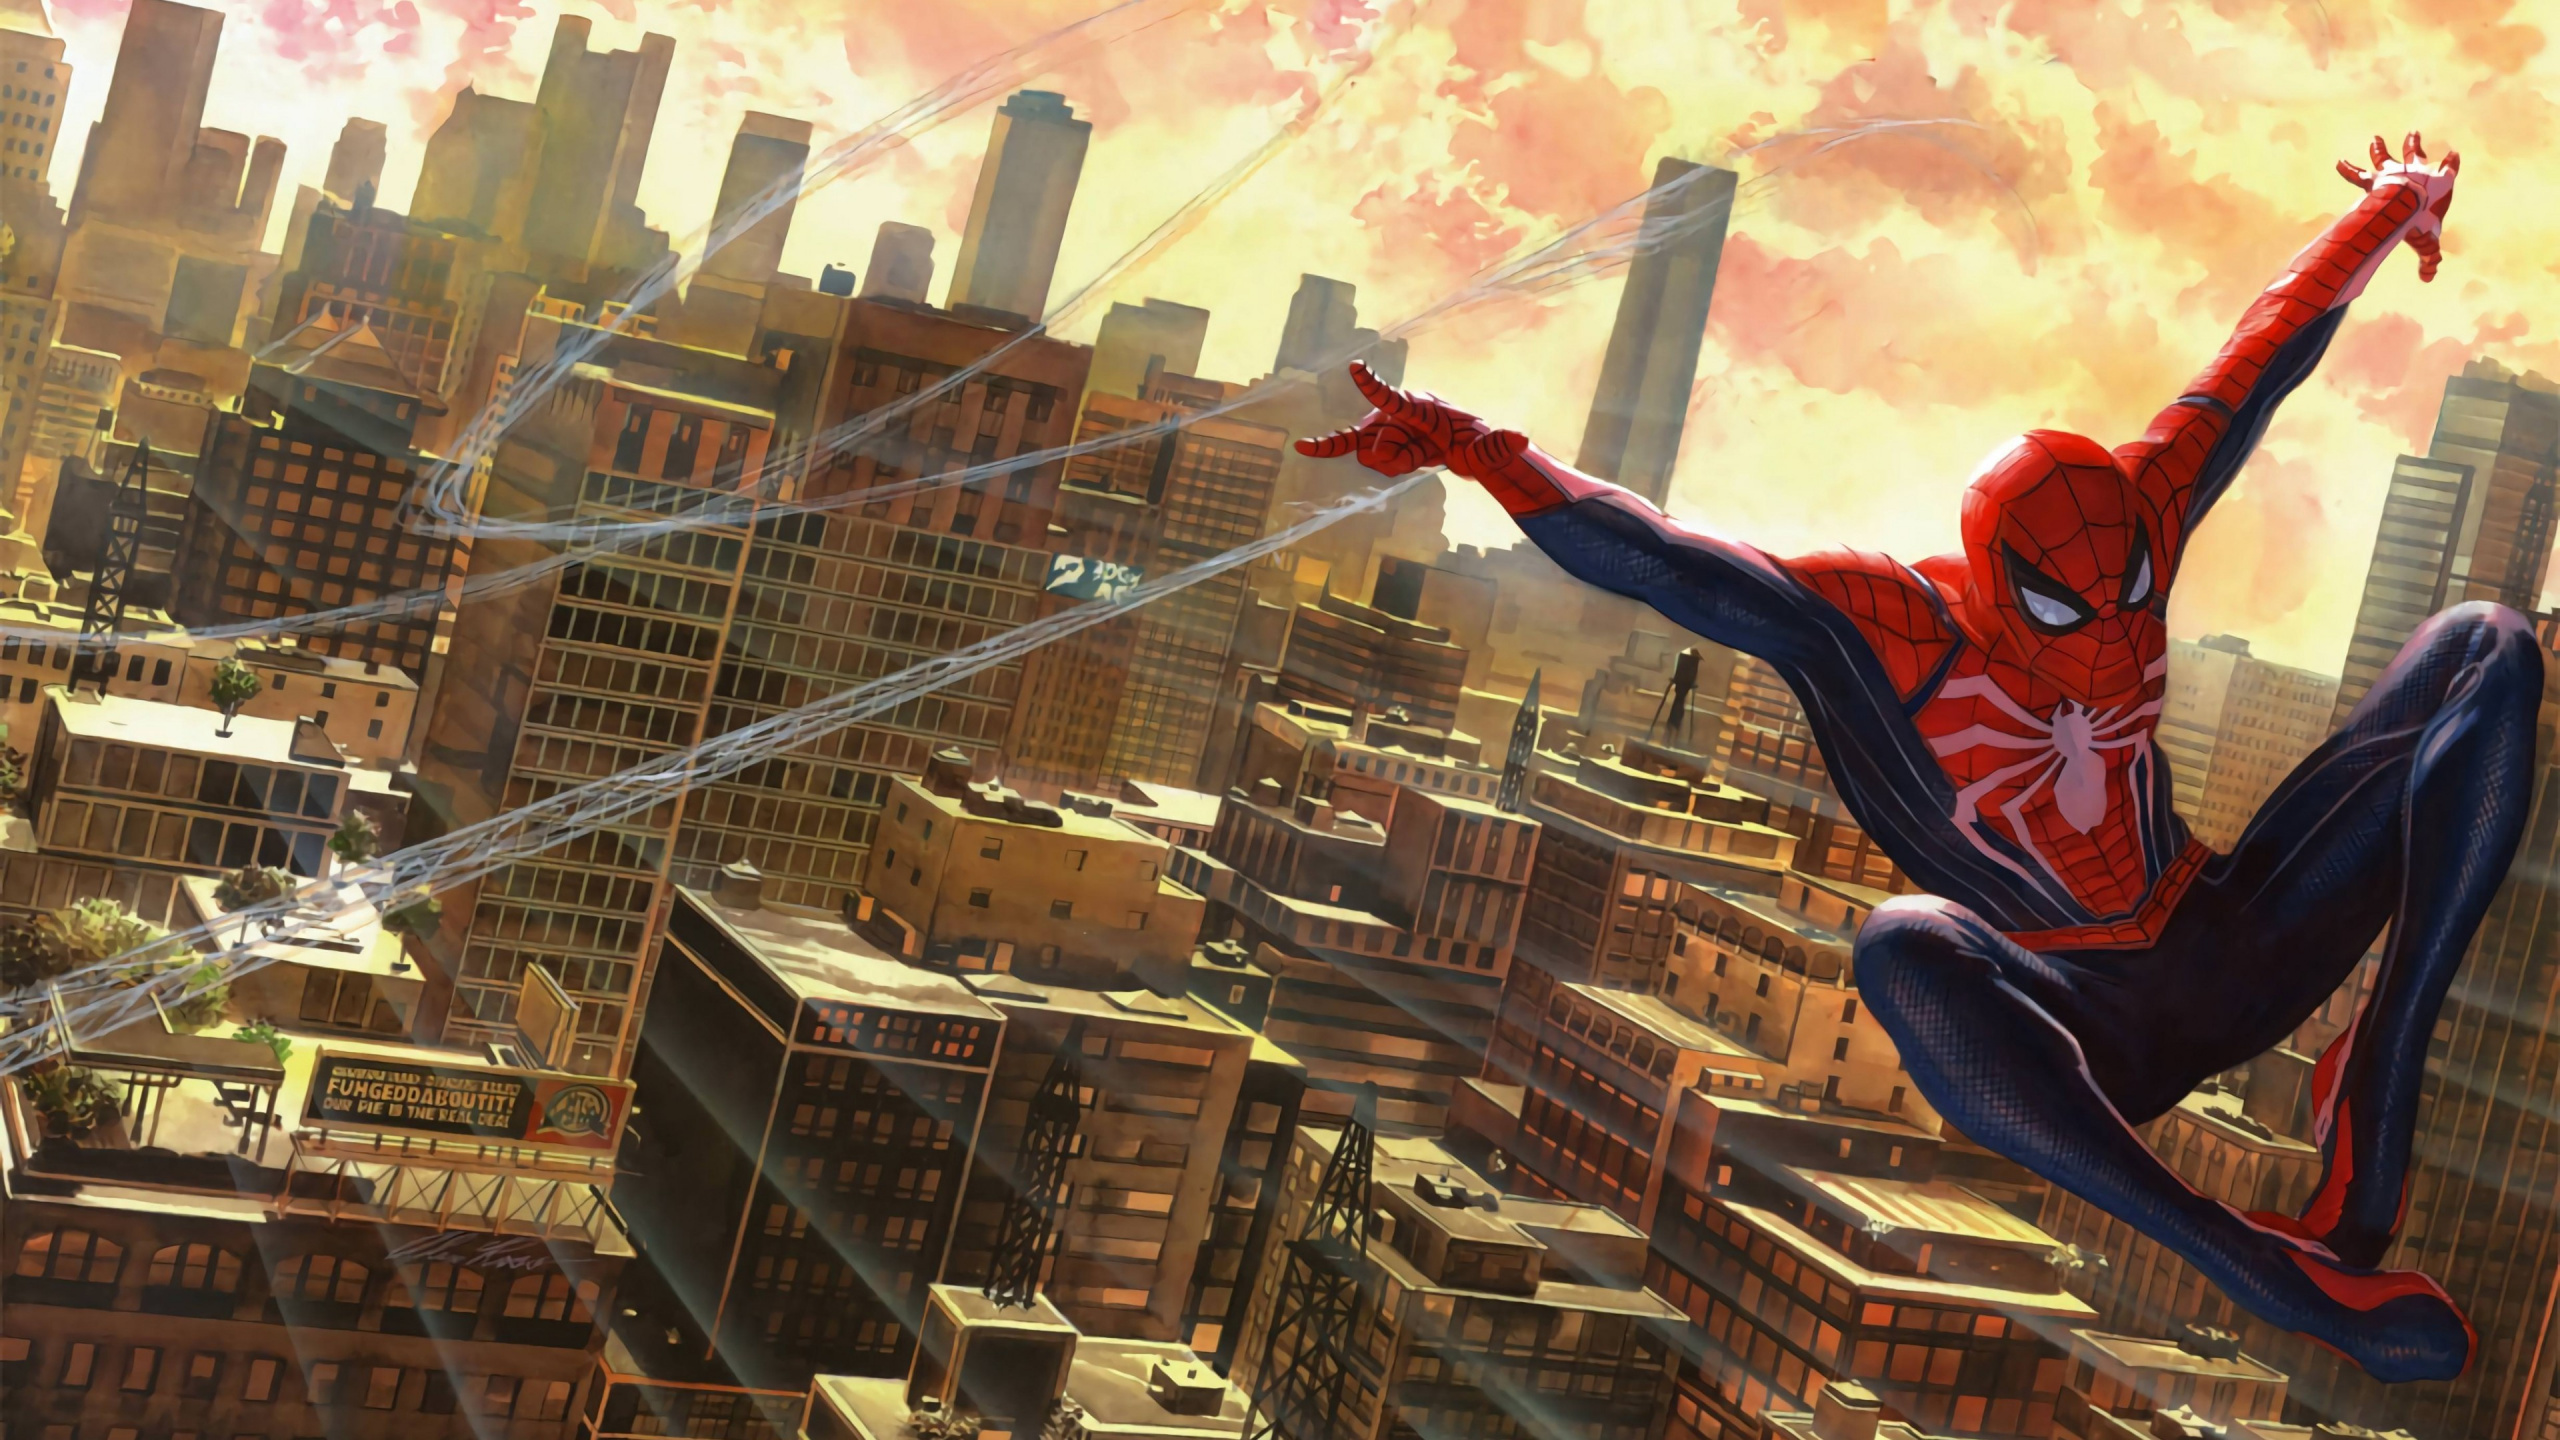 Spider-man, Superhero, Adventure Game, pc Game, Illustration. Wallpaper in 2560x1440 Resolution